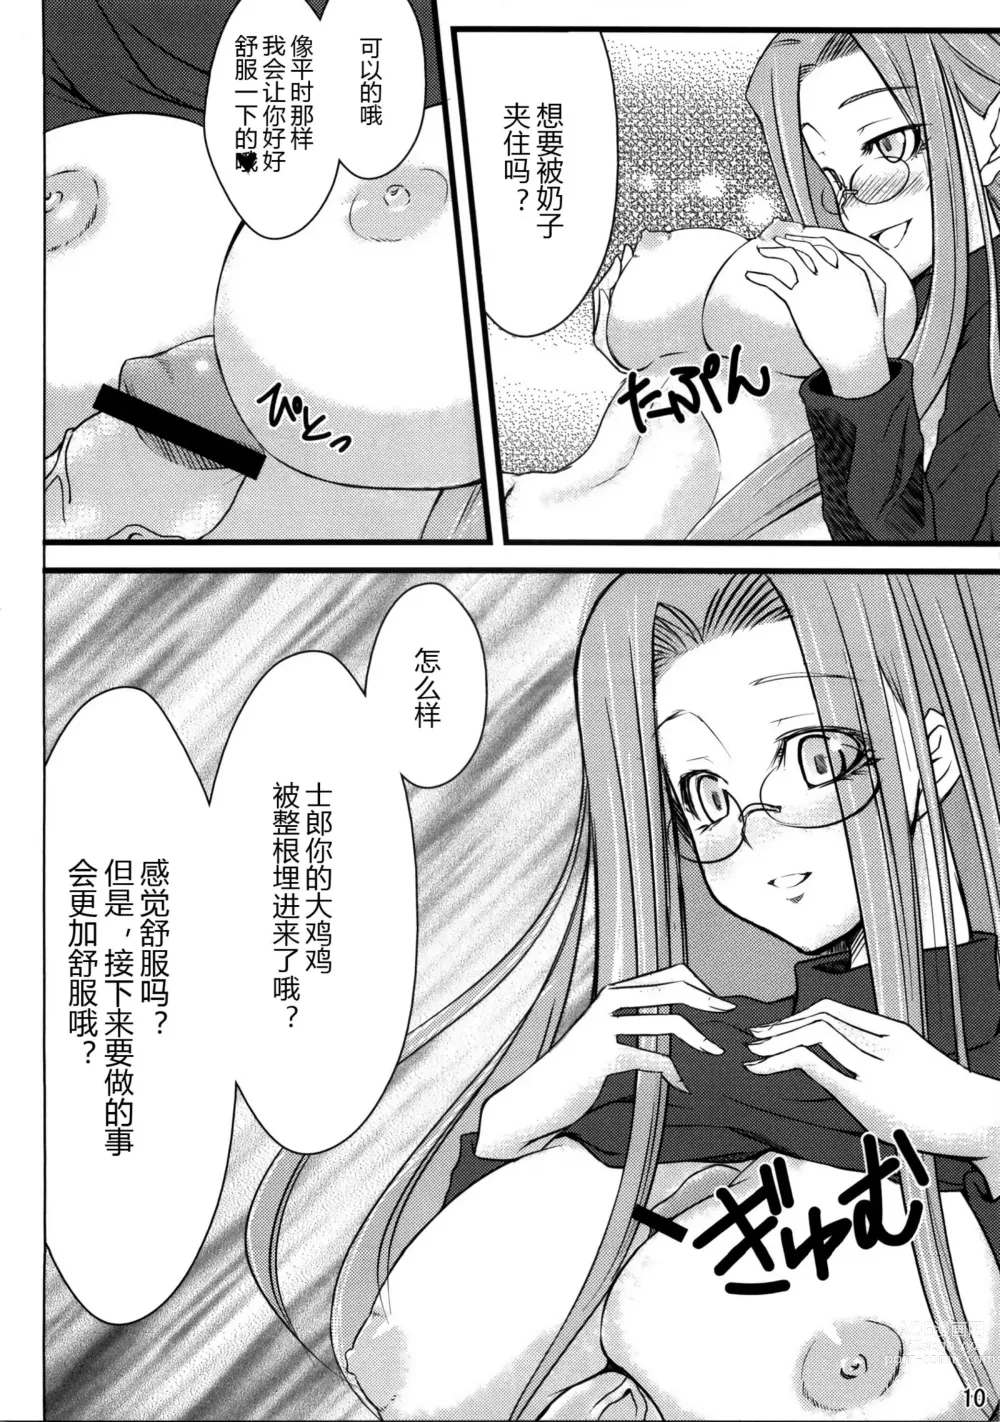 Page 10 of doujinshi R3